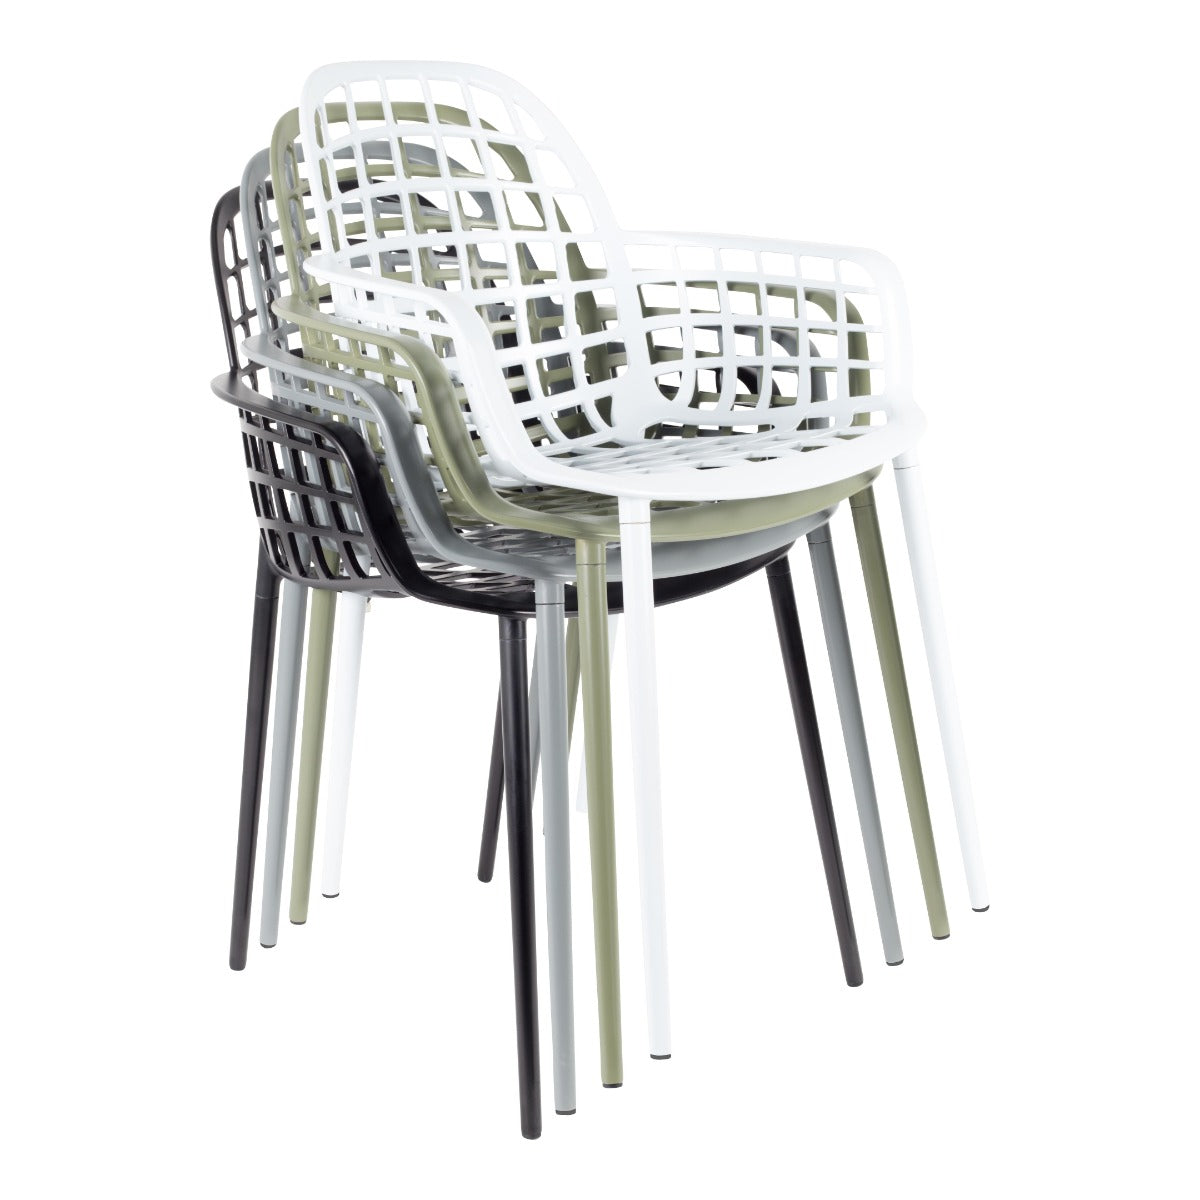 Garden chair ALBERT KUIP black, Zuiver, Eye on Design